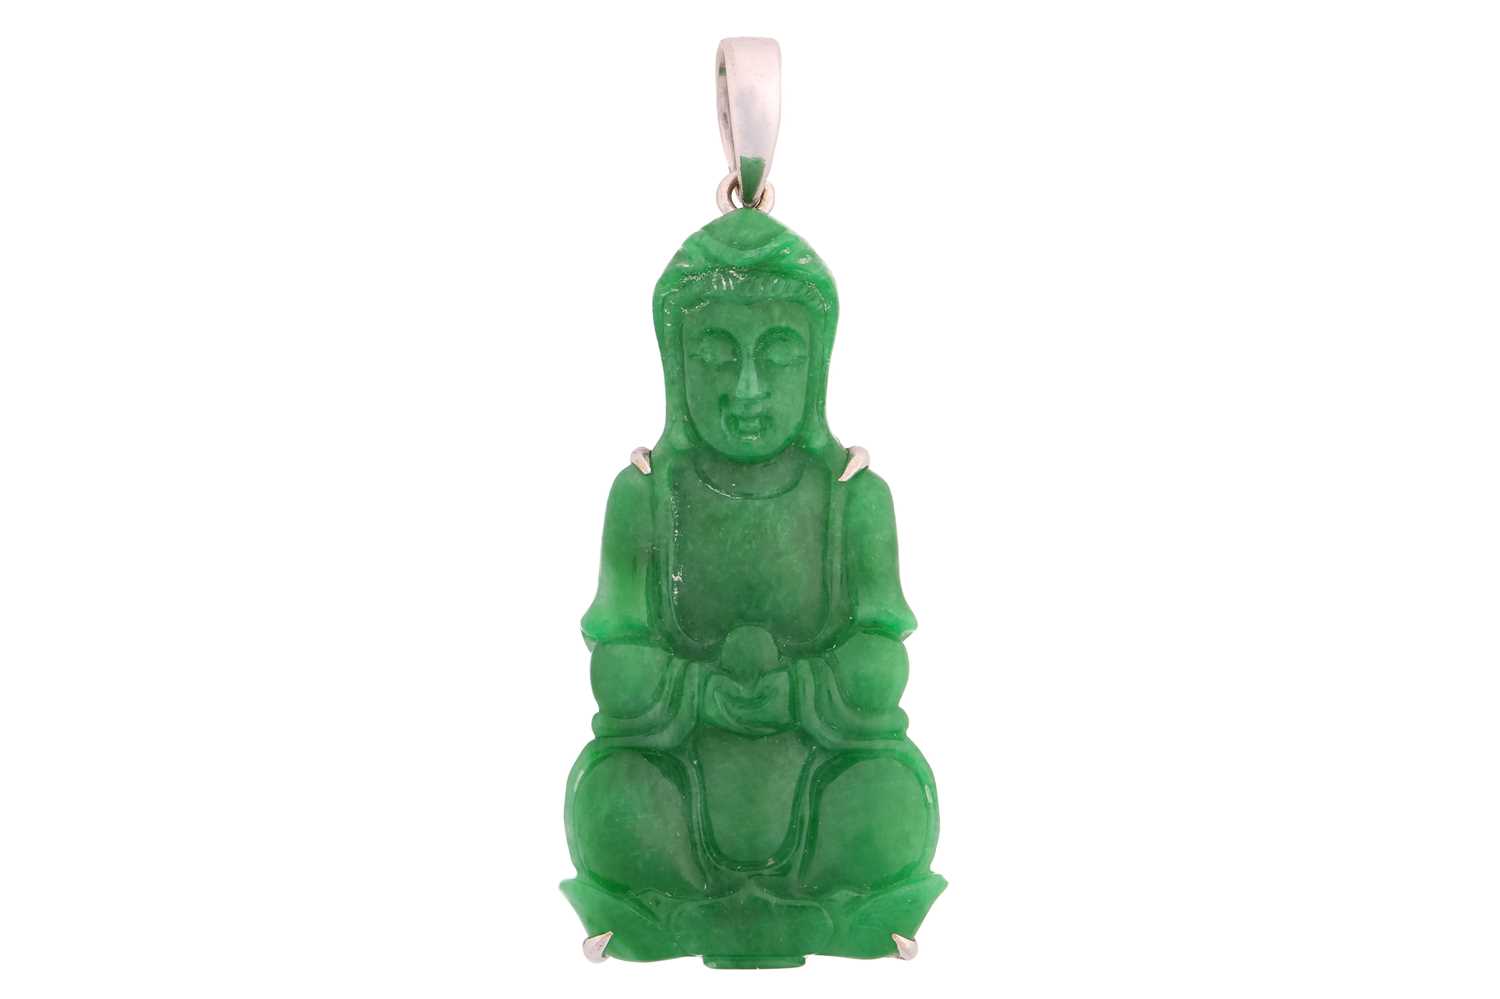 A Chinese carved jadeite Buddha pendant, depicting Shakyamuni Buddha performing Dhyana mudra on a - Image 4 of 4